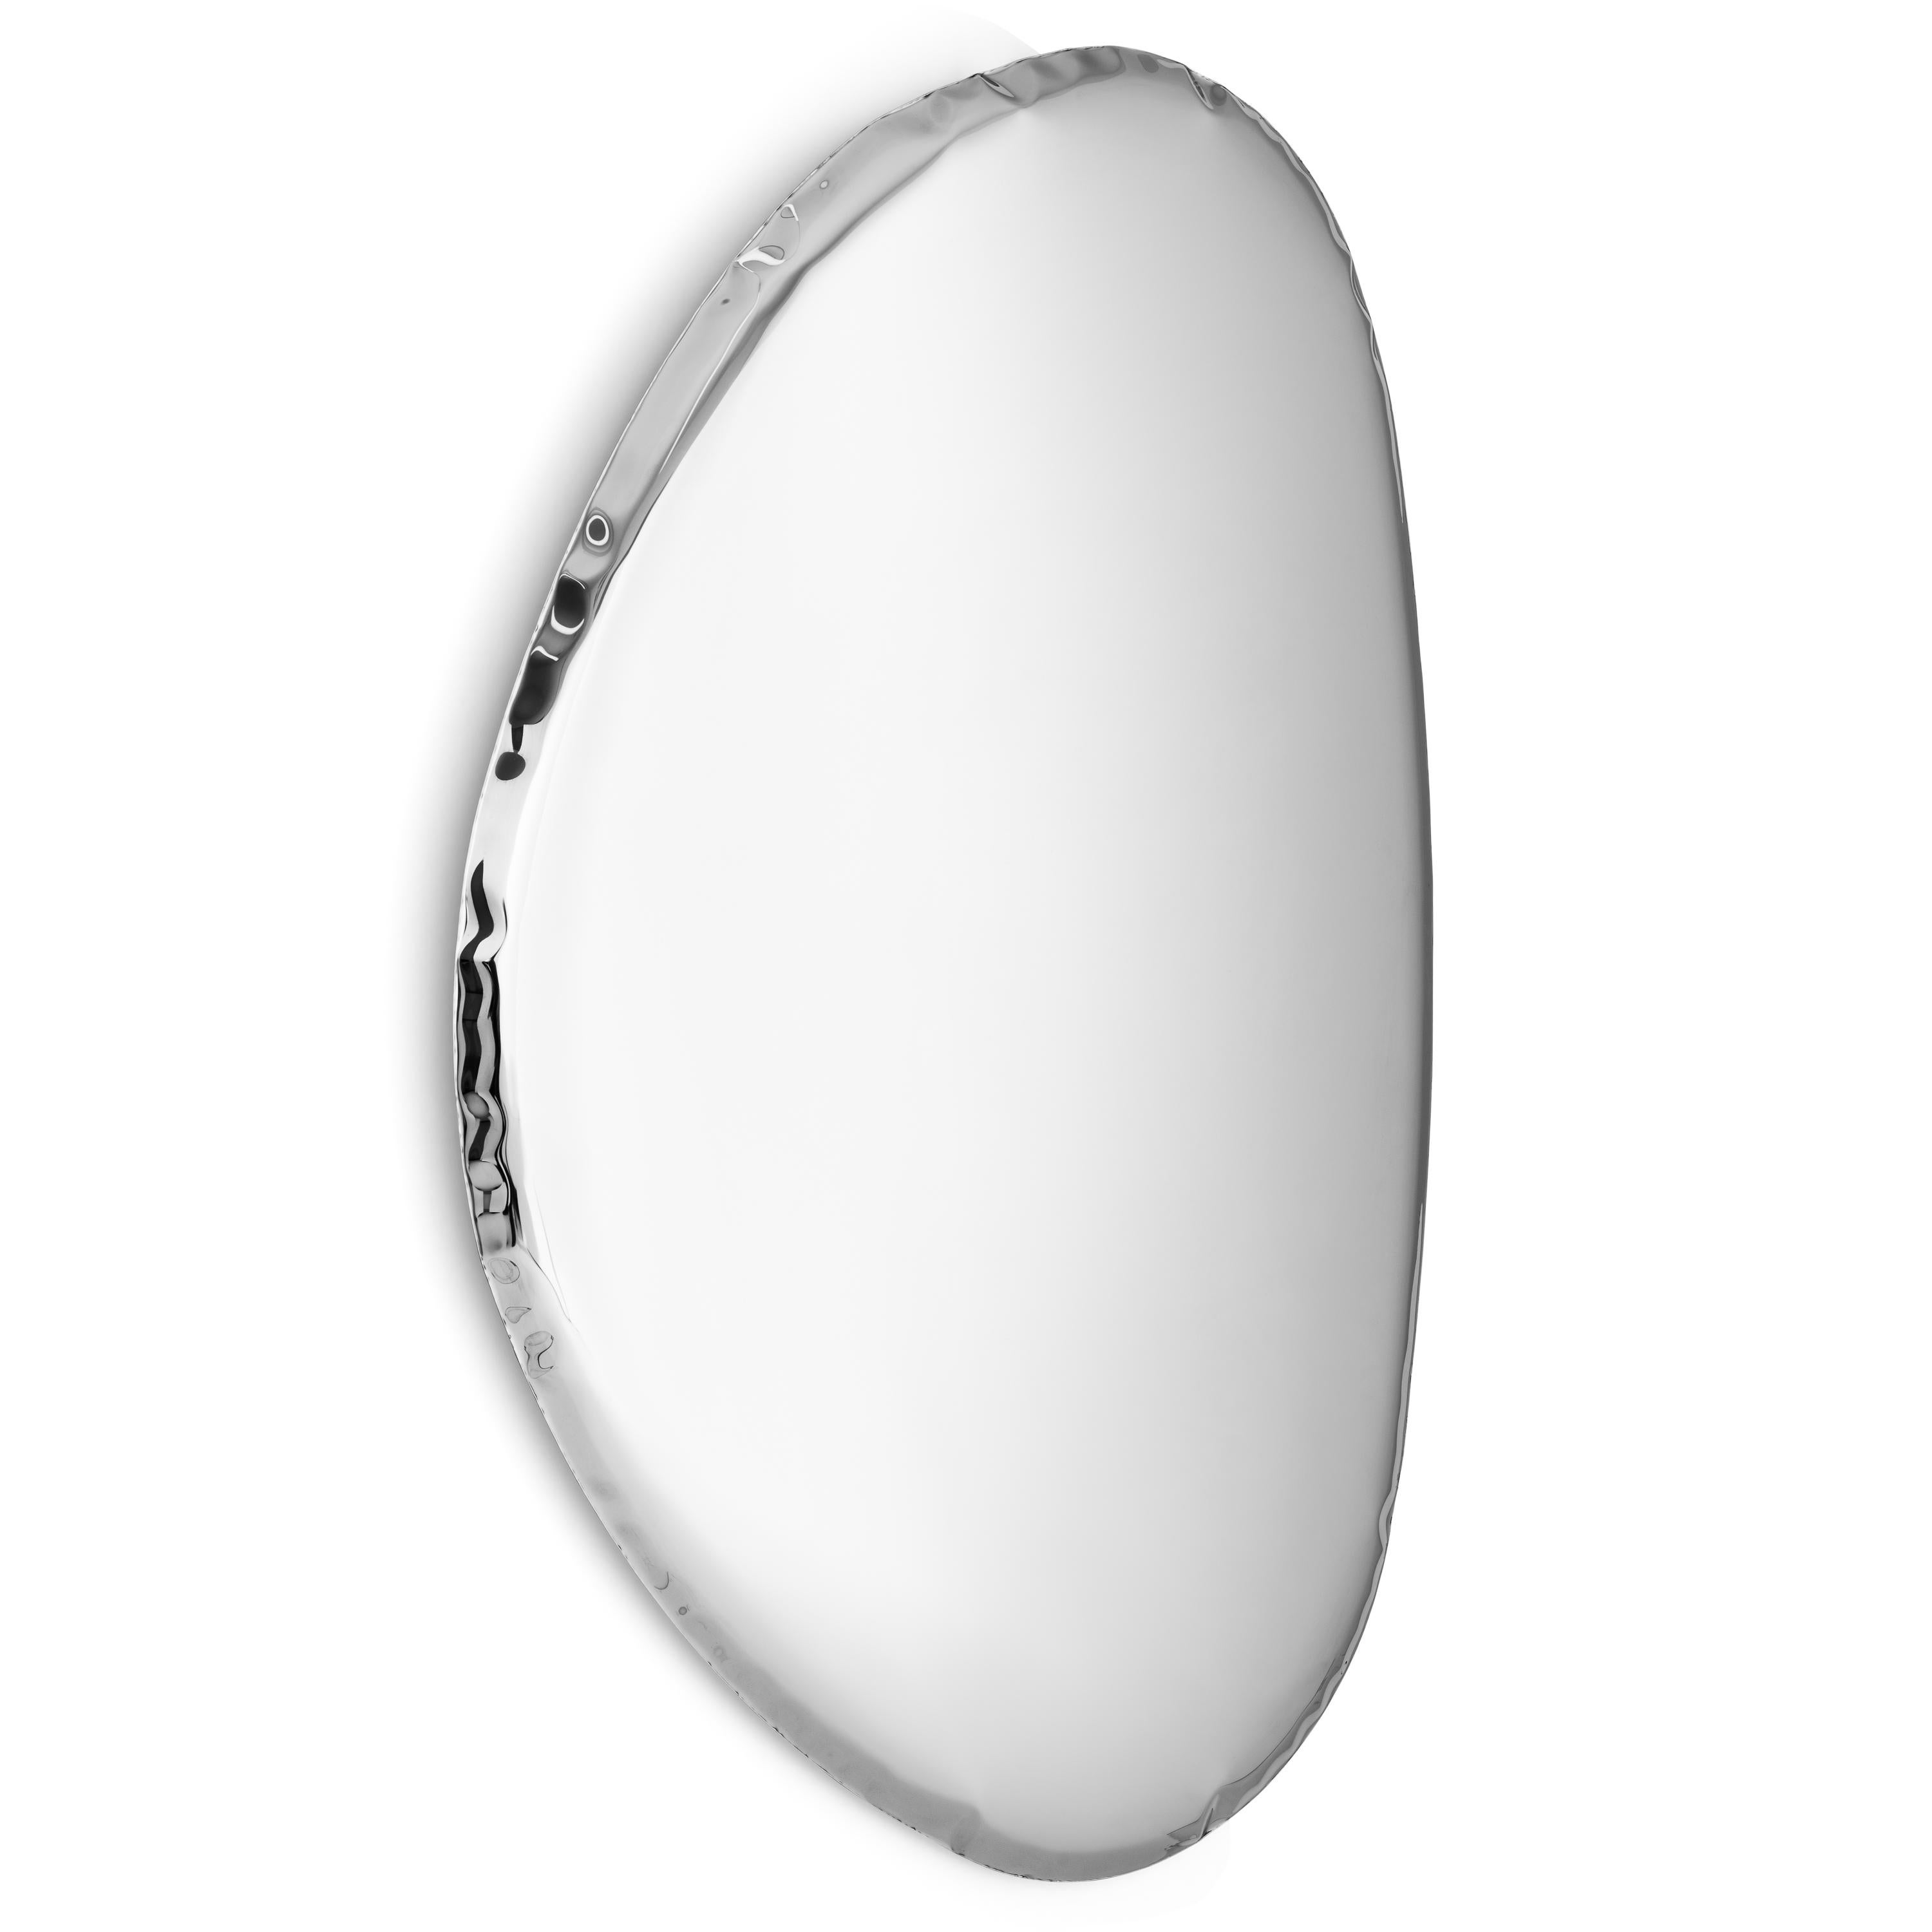 Tafla mirrors by Zieta
Polished stainless steel

Tafla O2
Measures: Height: 59.06 in. (150 cm)
Width: 38.19 in. (97 cm)
Depth: 2.37 in. (6 cm)

Tafla O3
Measures: Height: 48.82 in. (124 cm)
Width: 31.11 in. (79 cm)
Depth: 2.37 in. (6 cm)